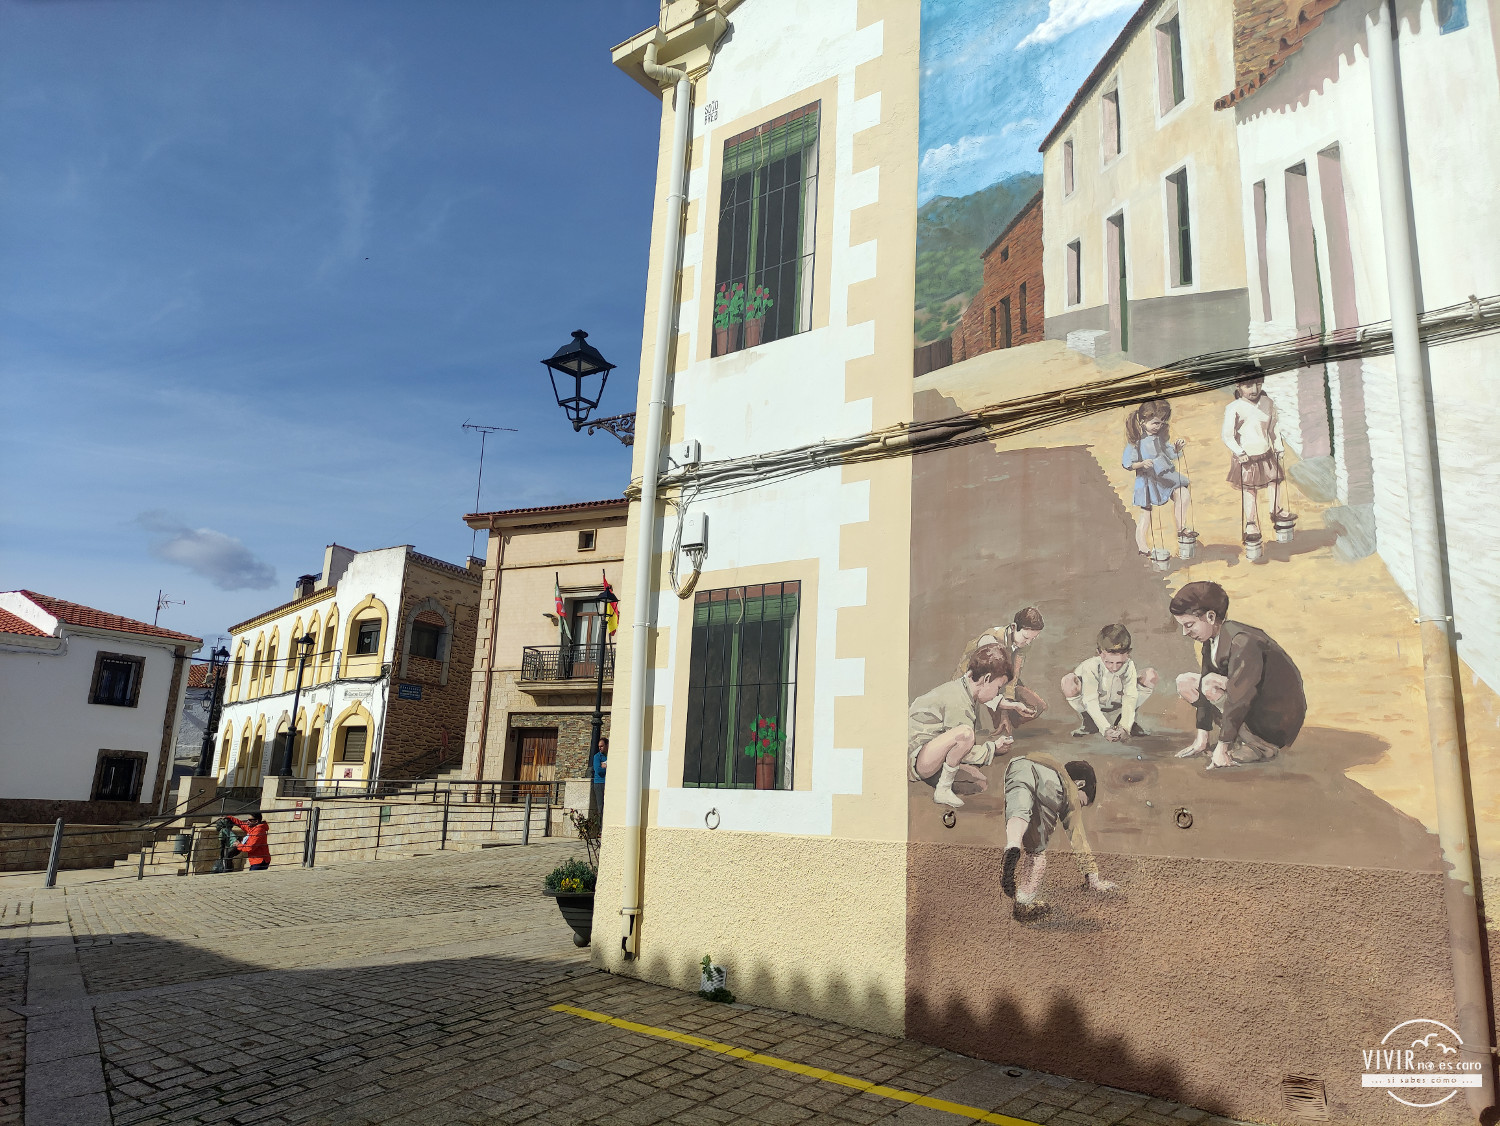 Trampantojo niños jugando en la calle de Romangordo (Cáceres)